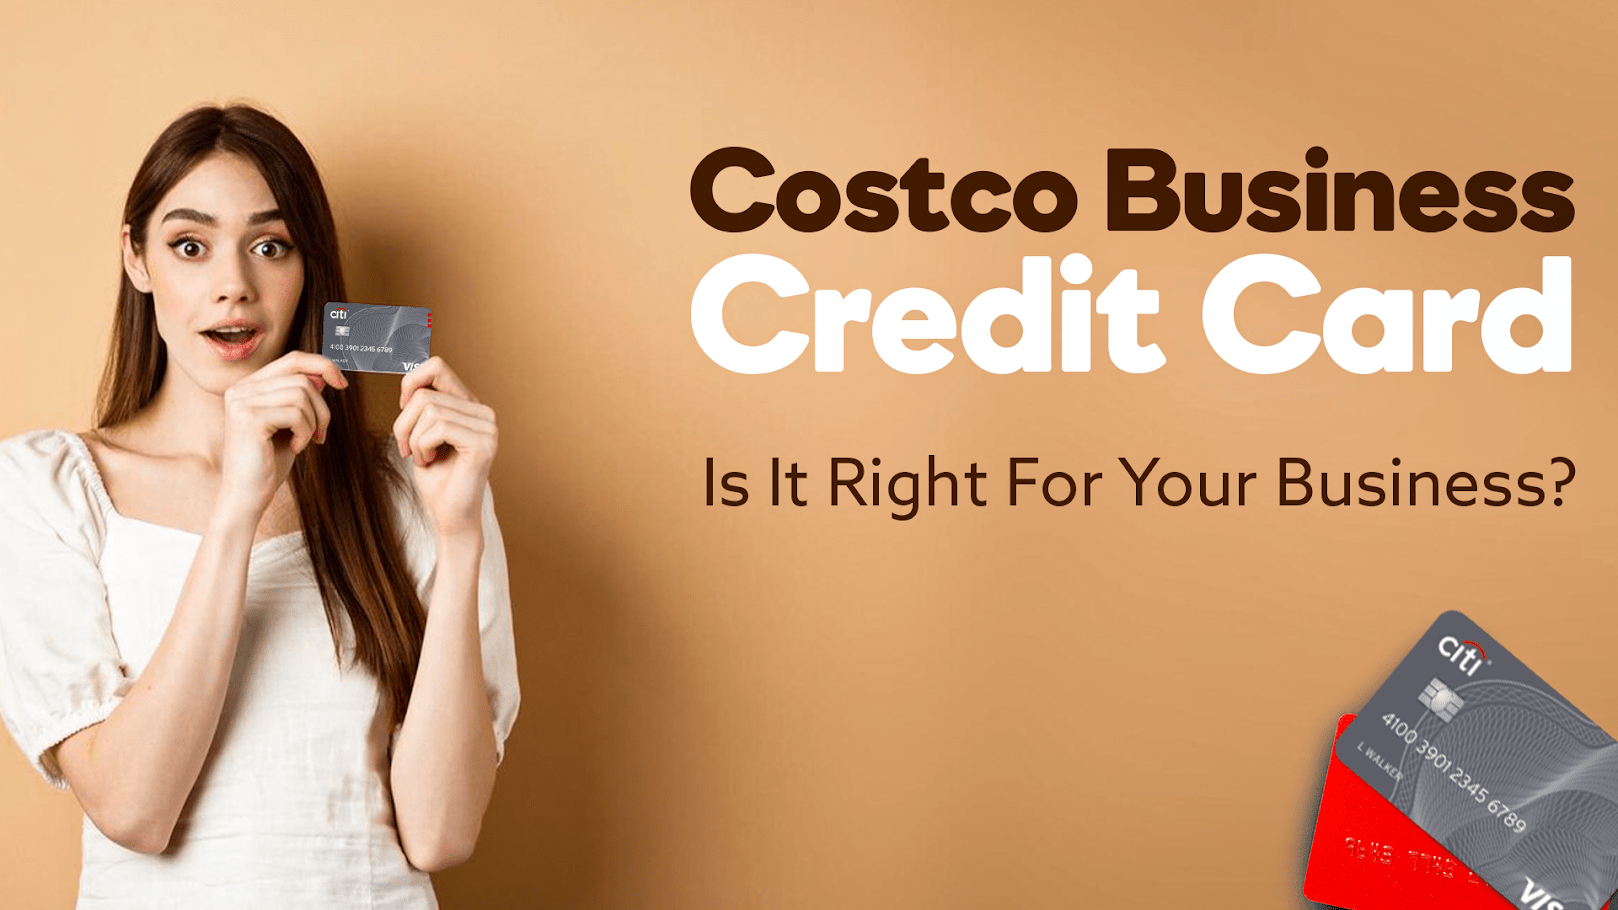 Costco Business Credit Card